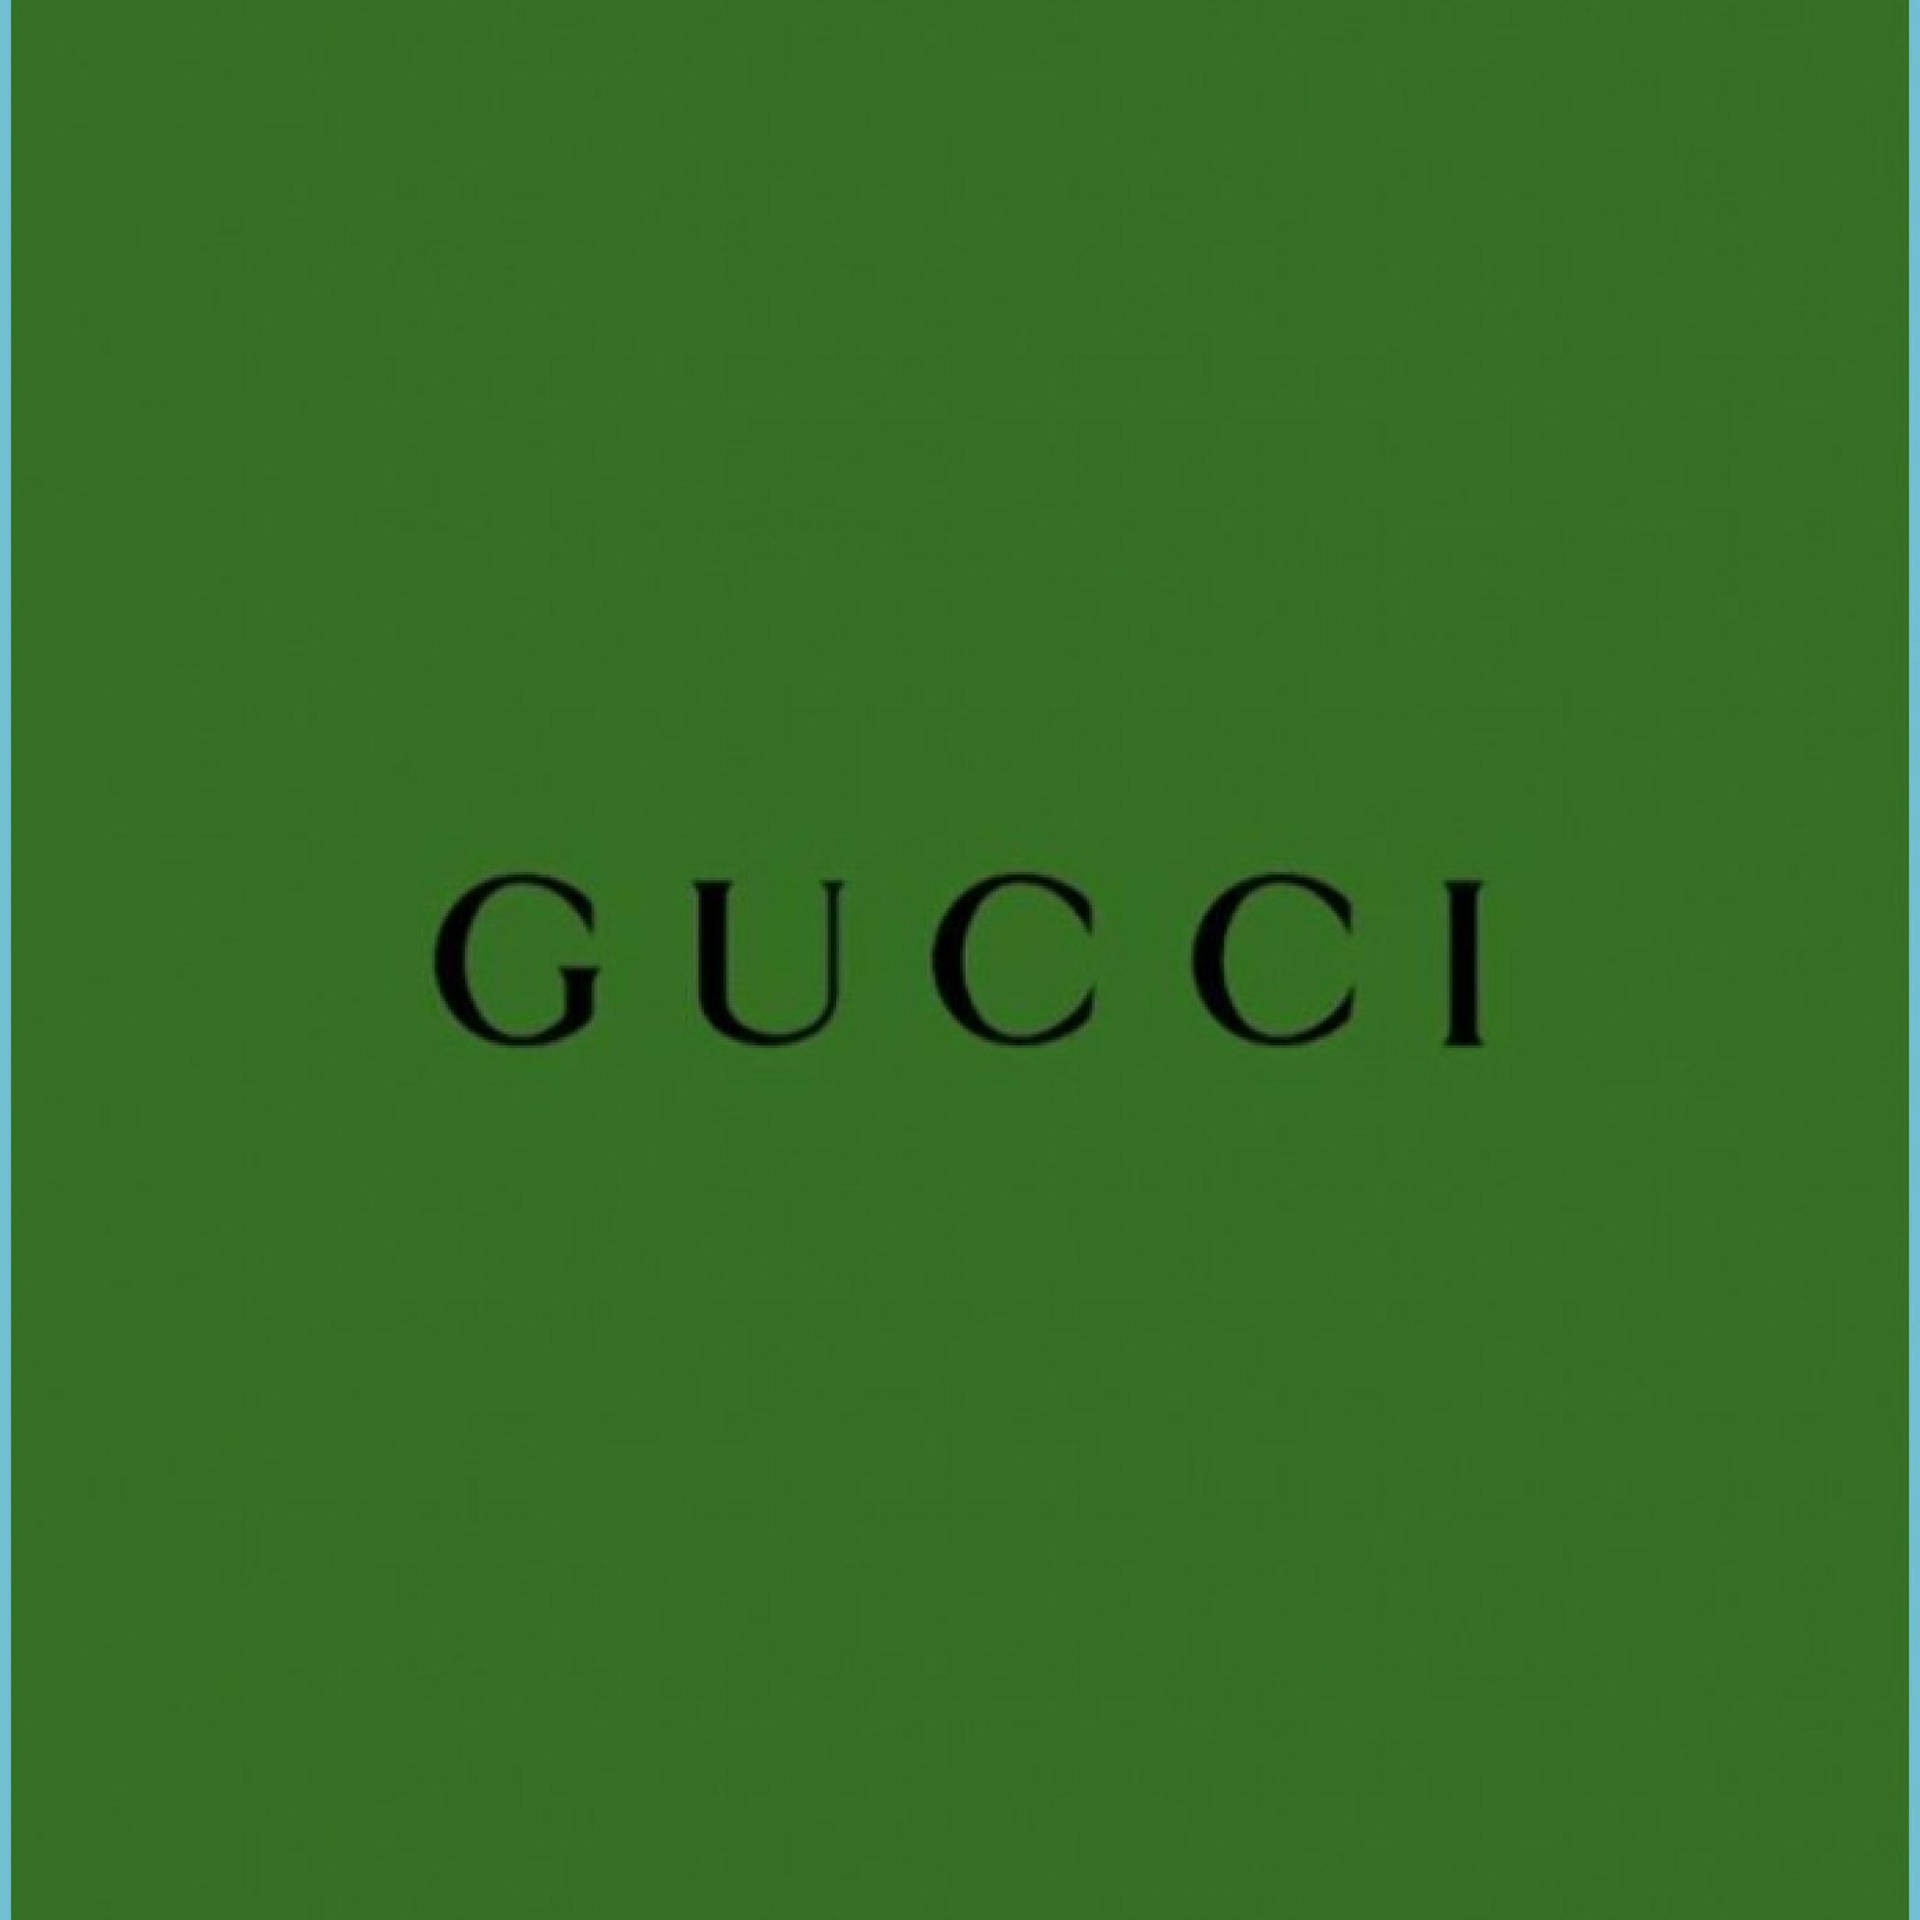 Gucci Plain Green Wallpaper